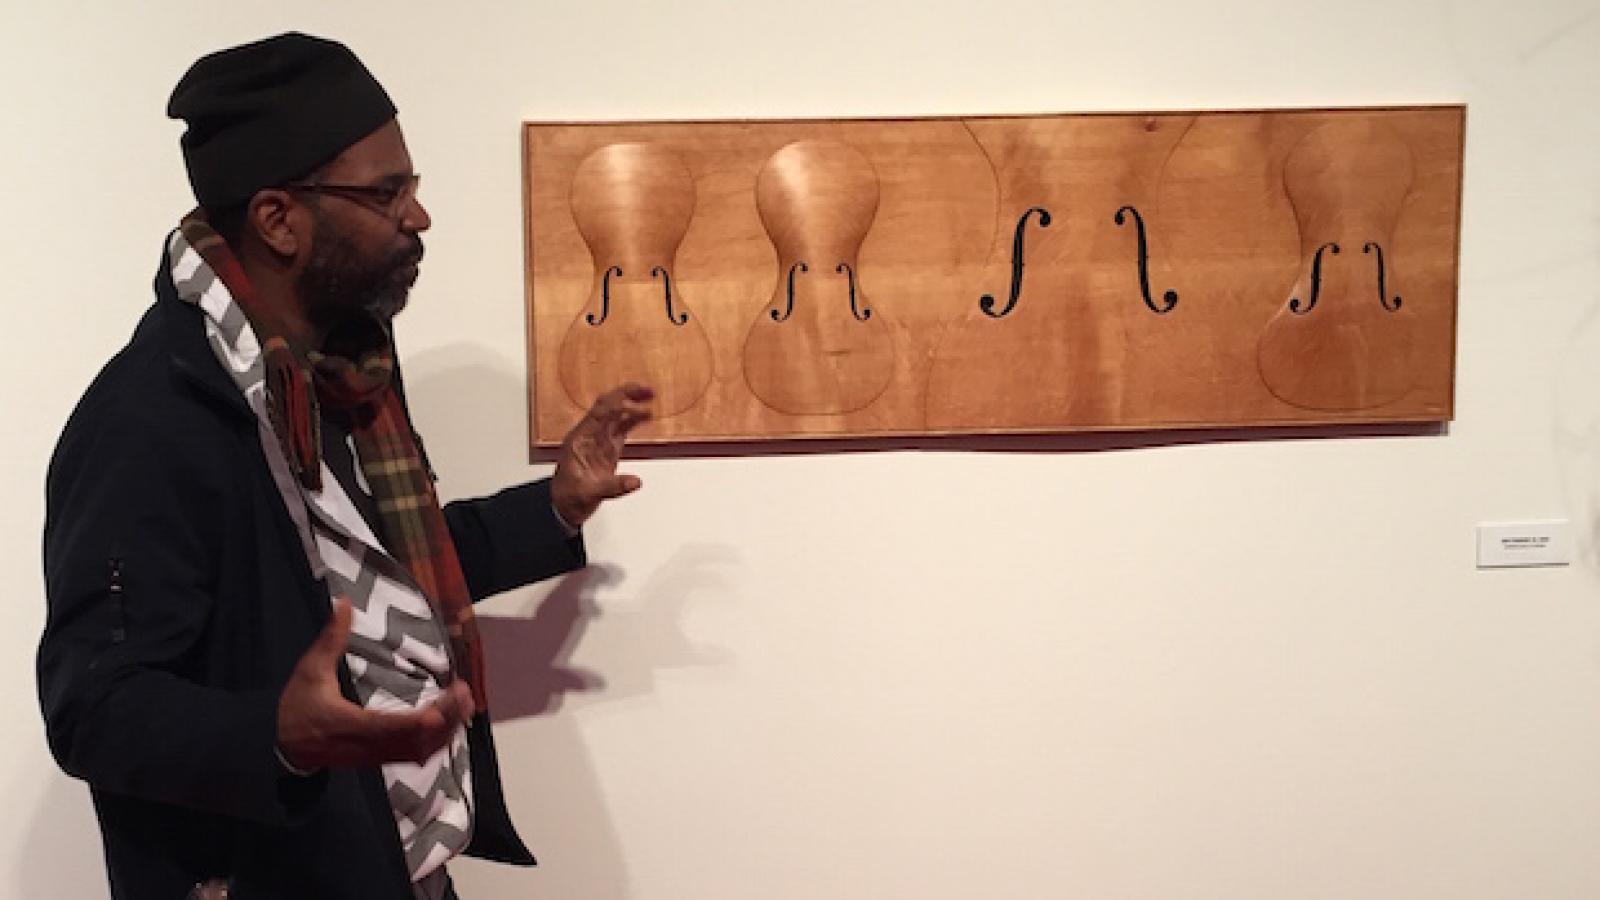 paul_rucker_explains_wood_carvings_during_art_studio_tour